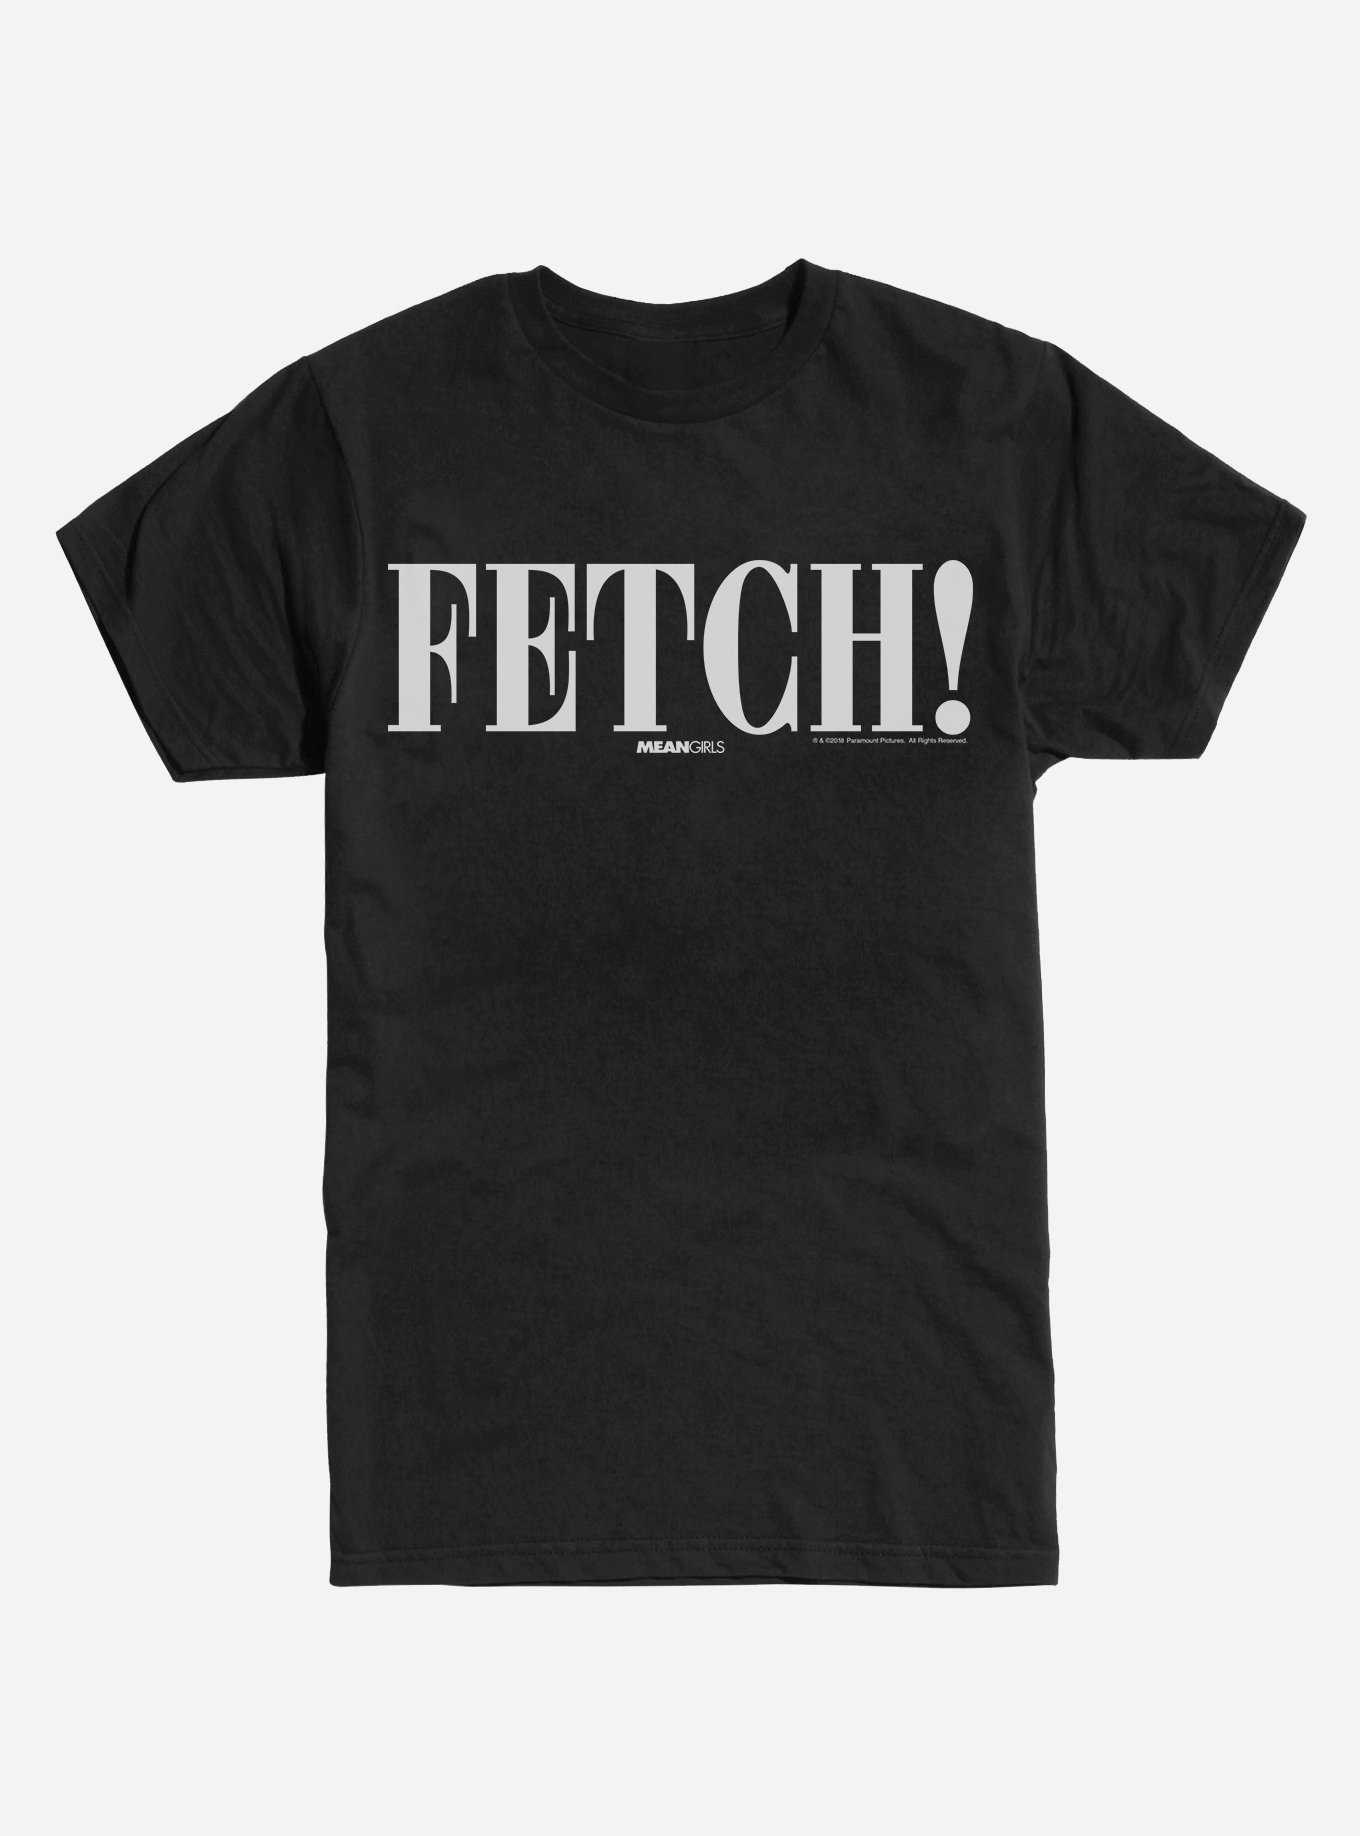 Mean Girls Fetch! T-Shirt, , hi-res